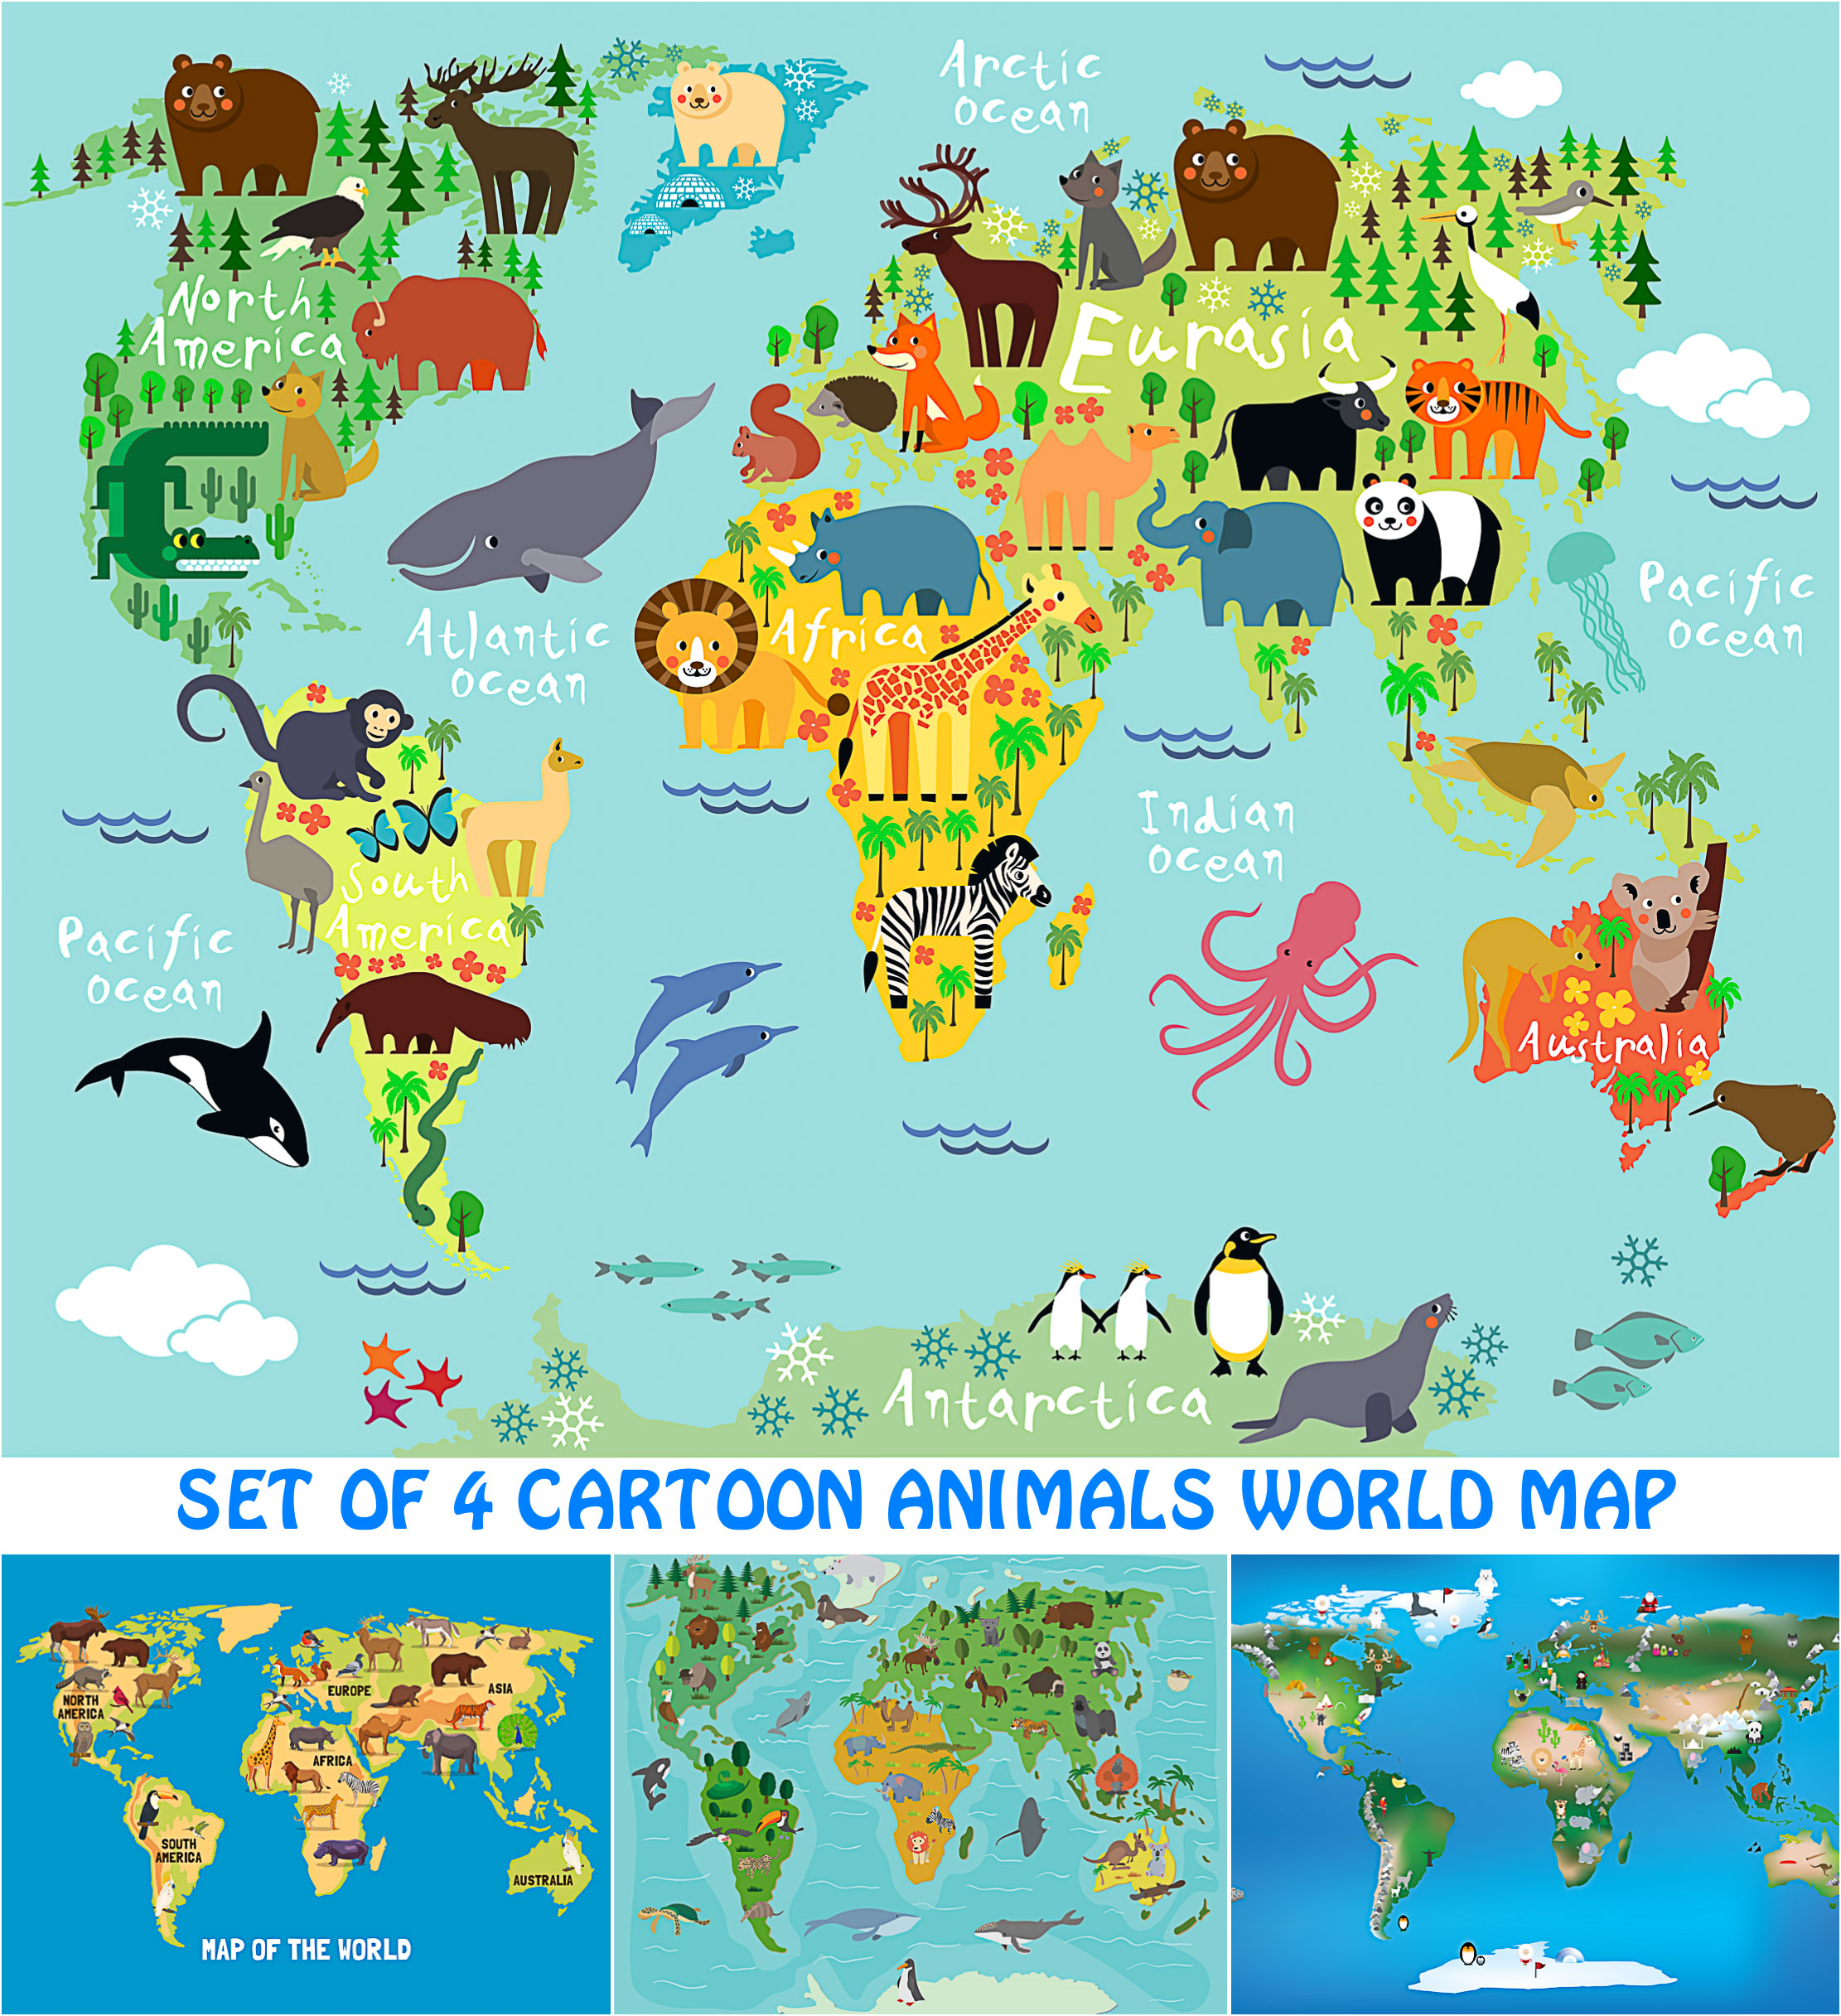 Cartoon animals world map set vector | Free download